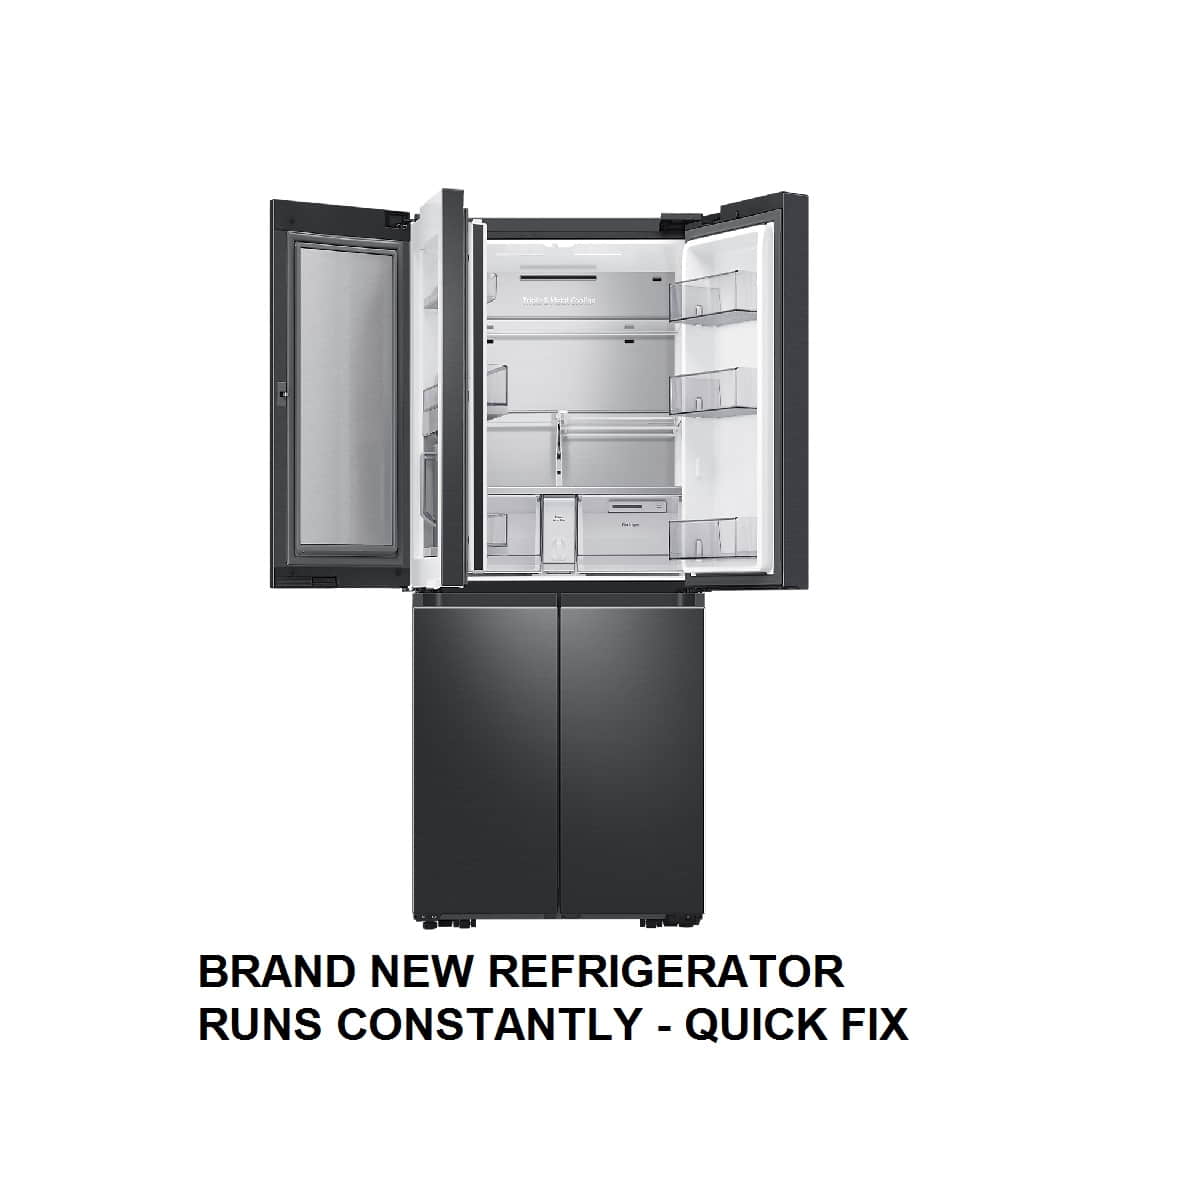 Brand new fridge runs constantly